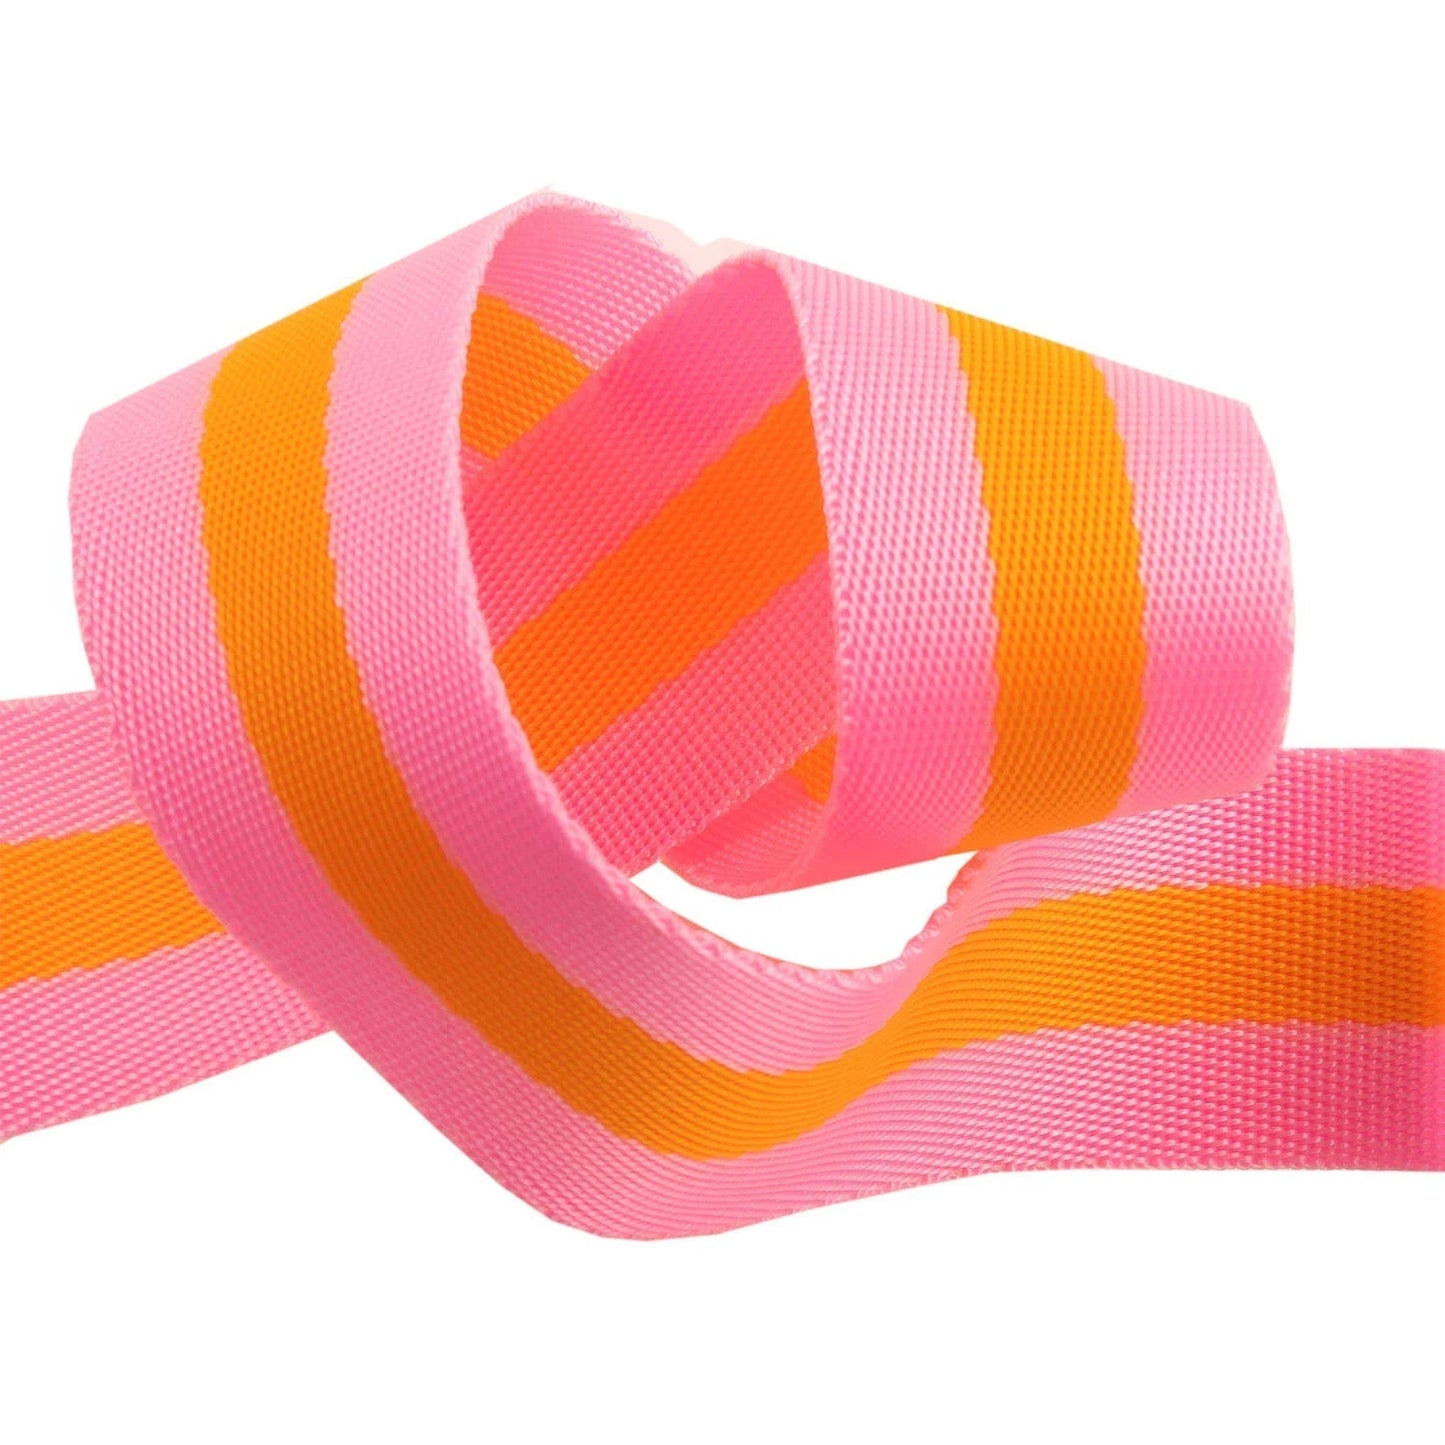 Tula Pink Webbing - Pink/Orange by Renaissance Ribbons